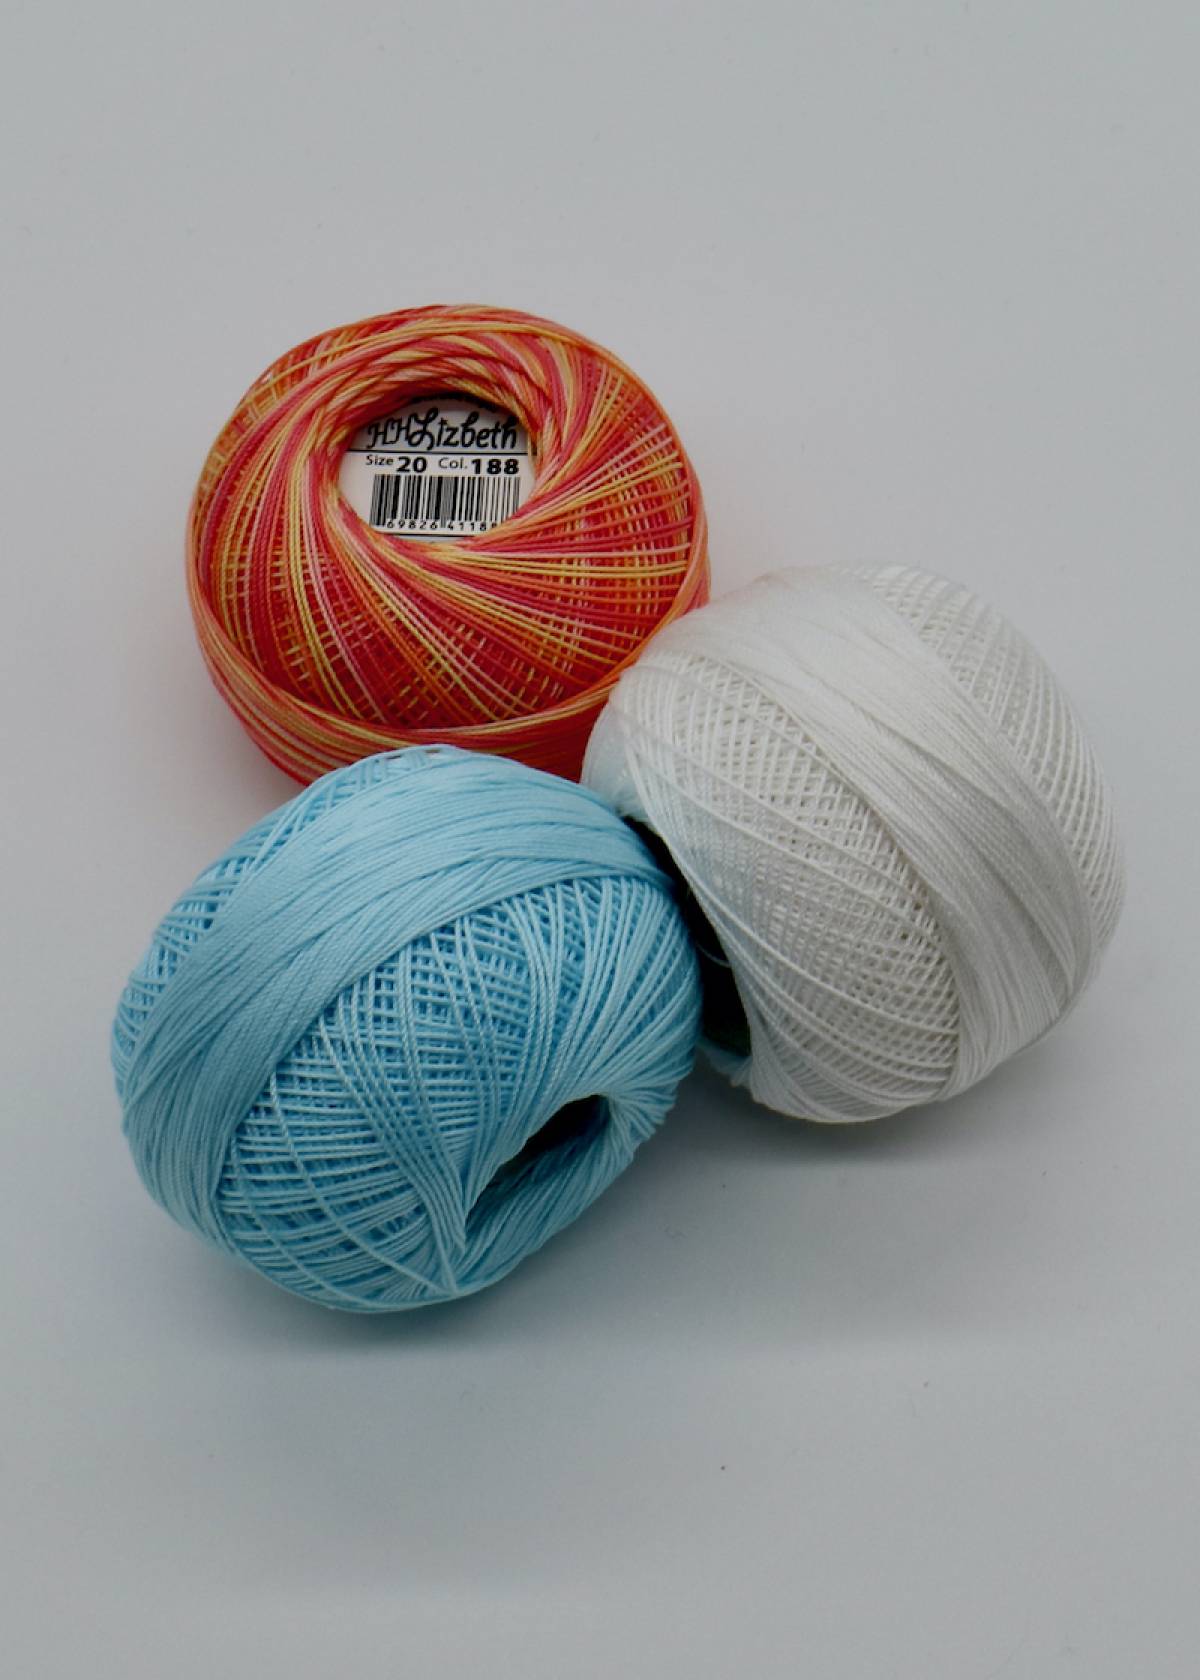 Lizbeth Egyptian Cotton Crochet Thread Size 20 Color 662 Light Turquoise 